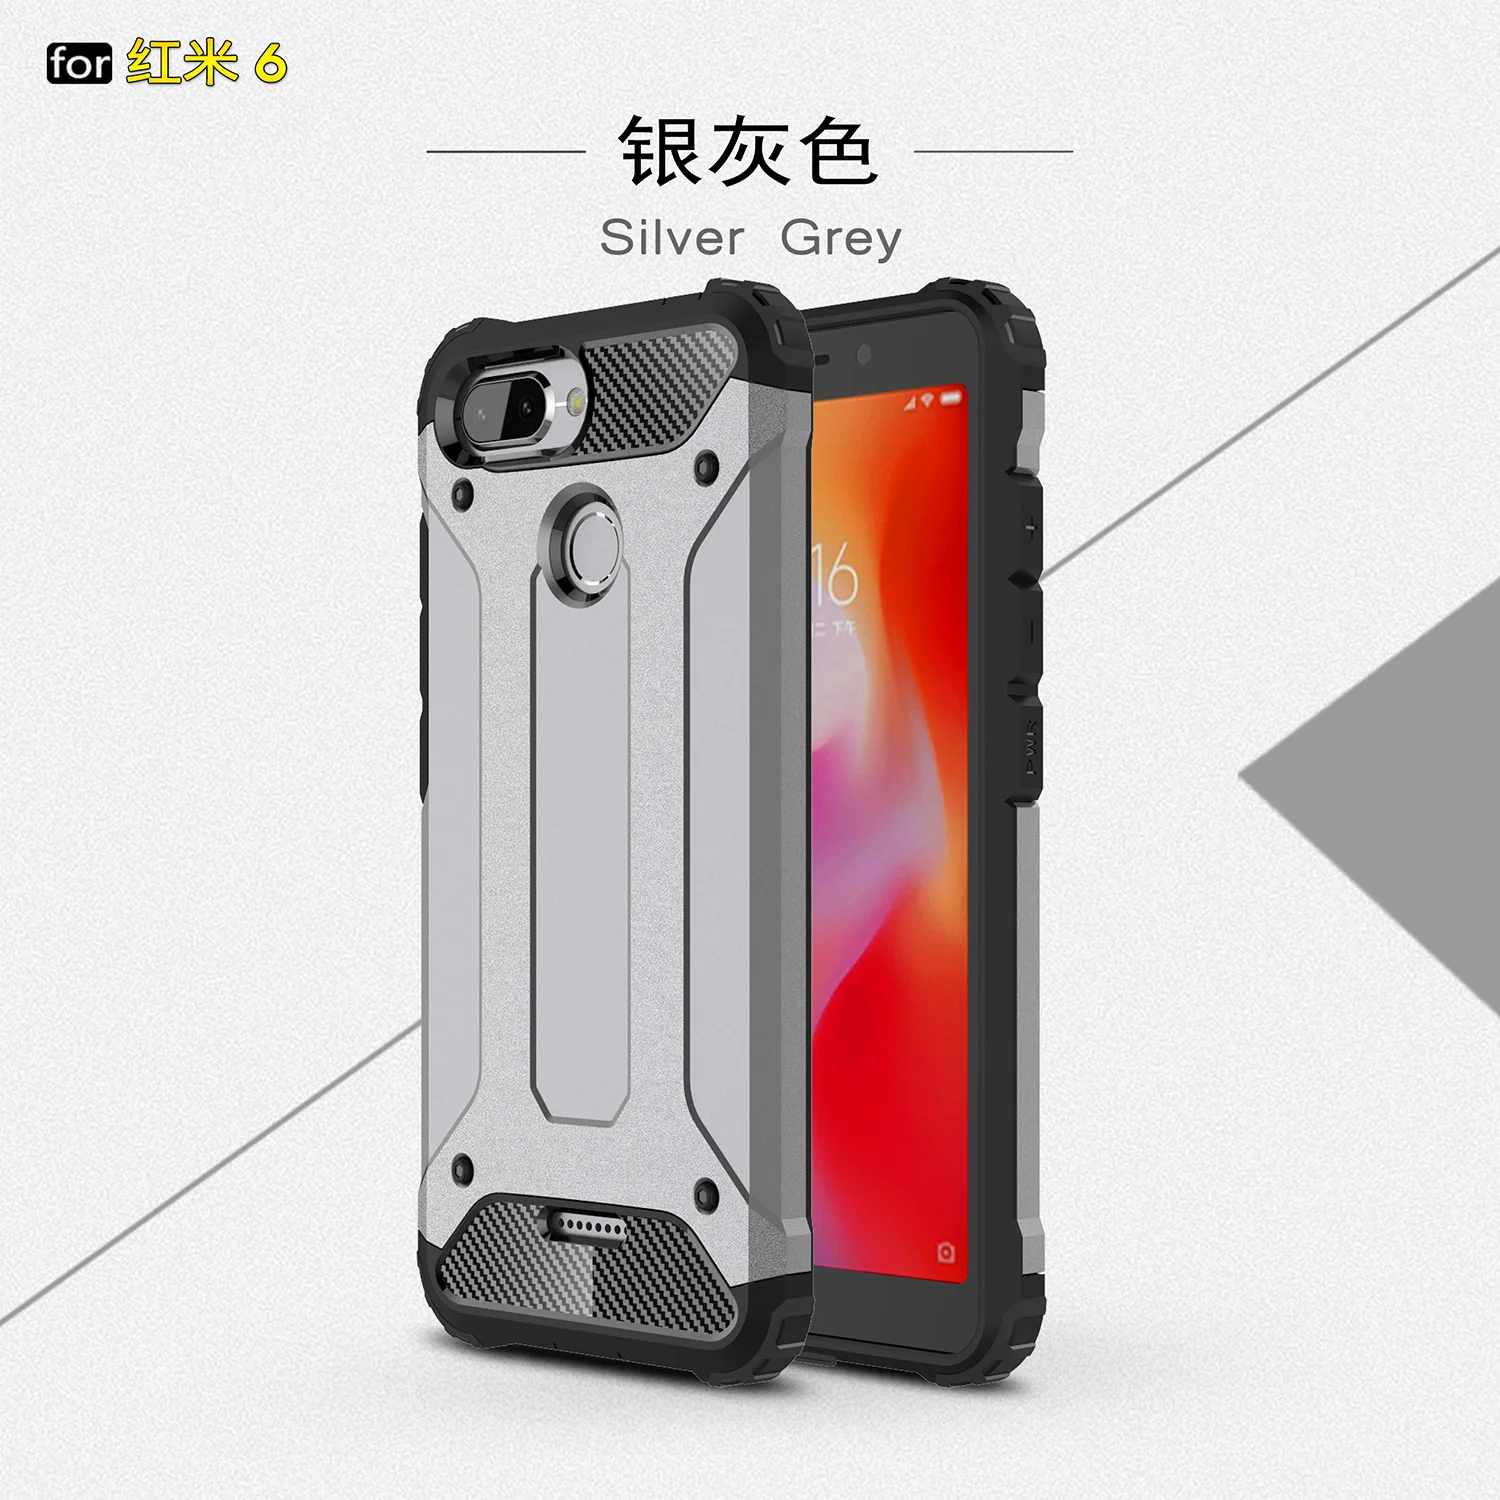 Armor Xiaomi Redmi 6 Case Shockproof Rubber Silicone Hard Back Protective 5.45